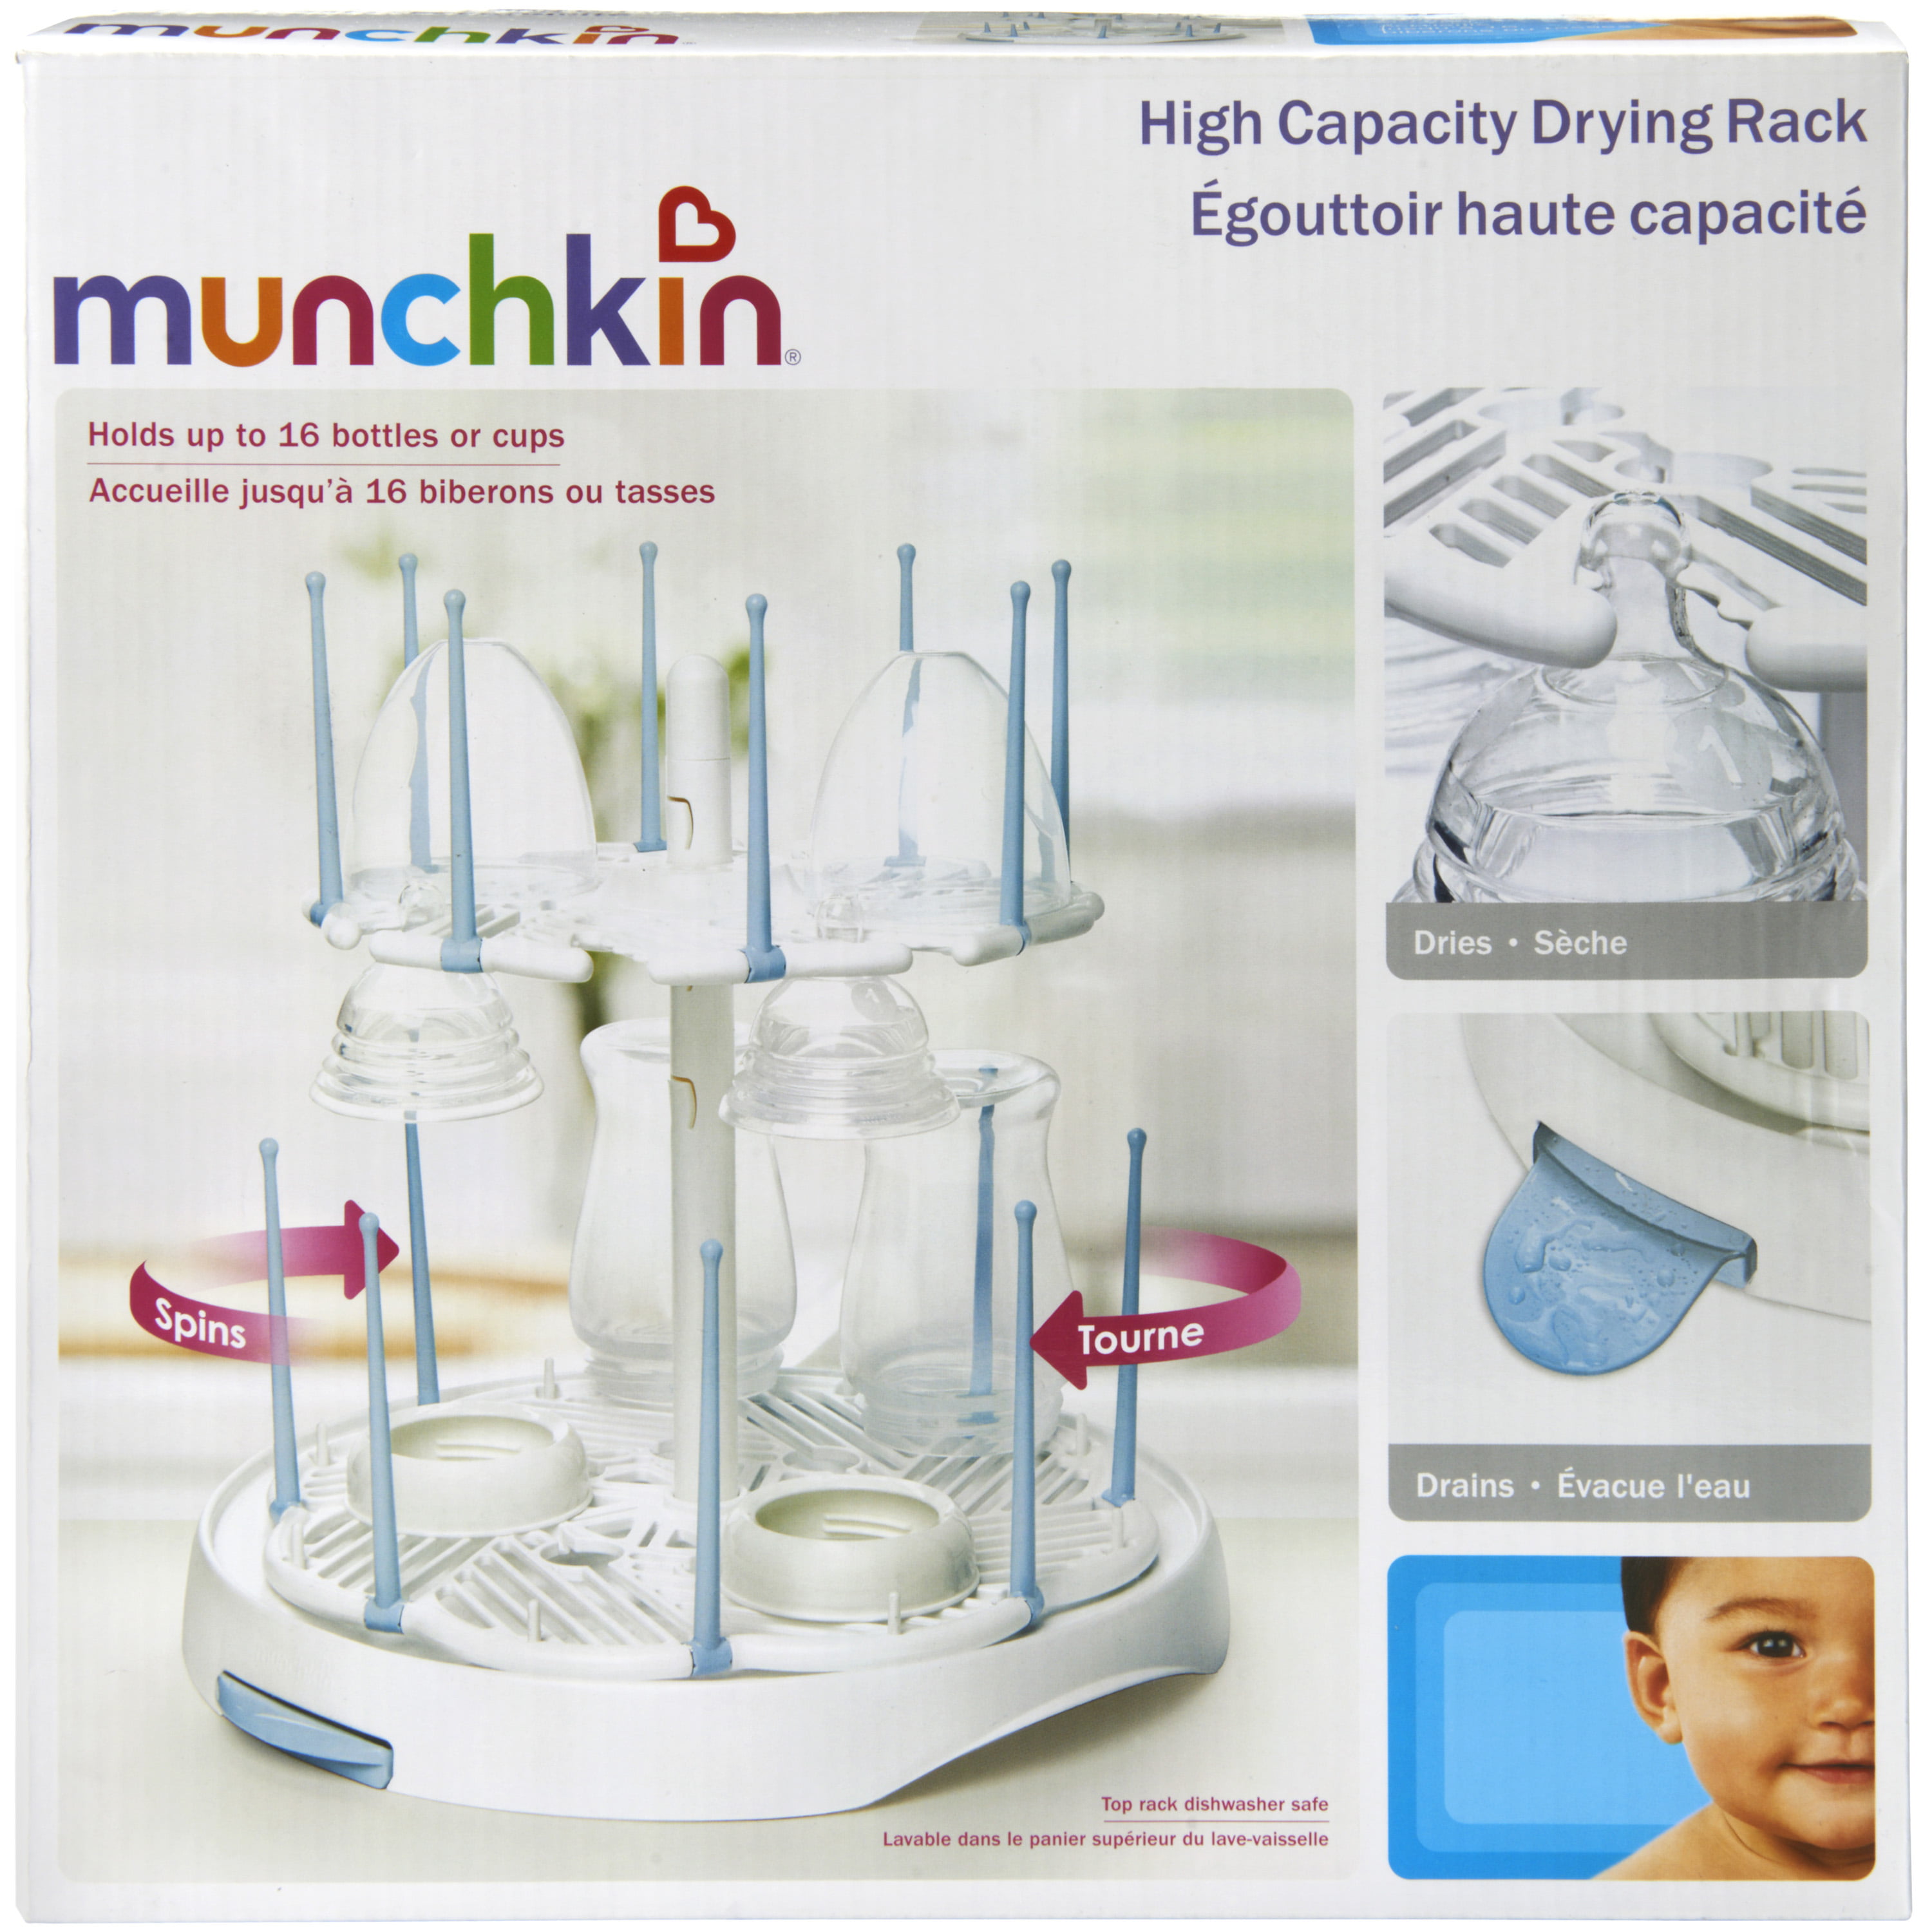 munchkin drying rack